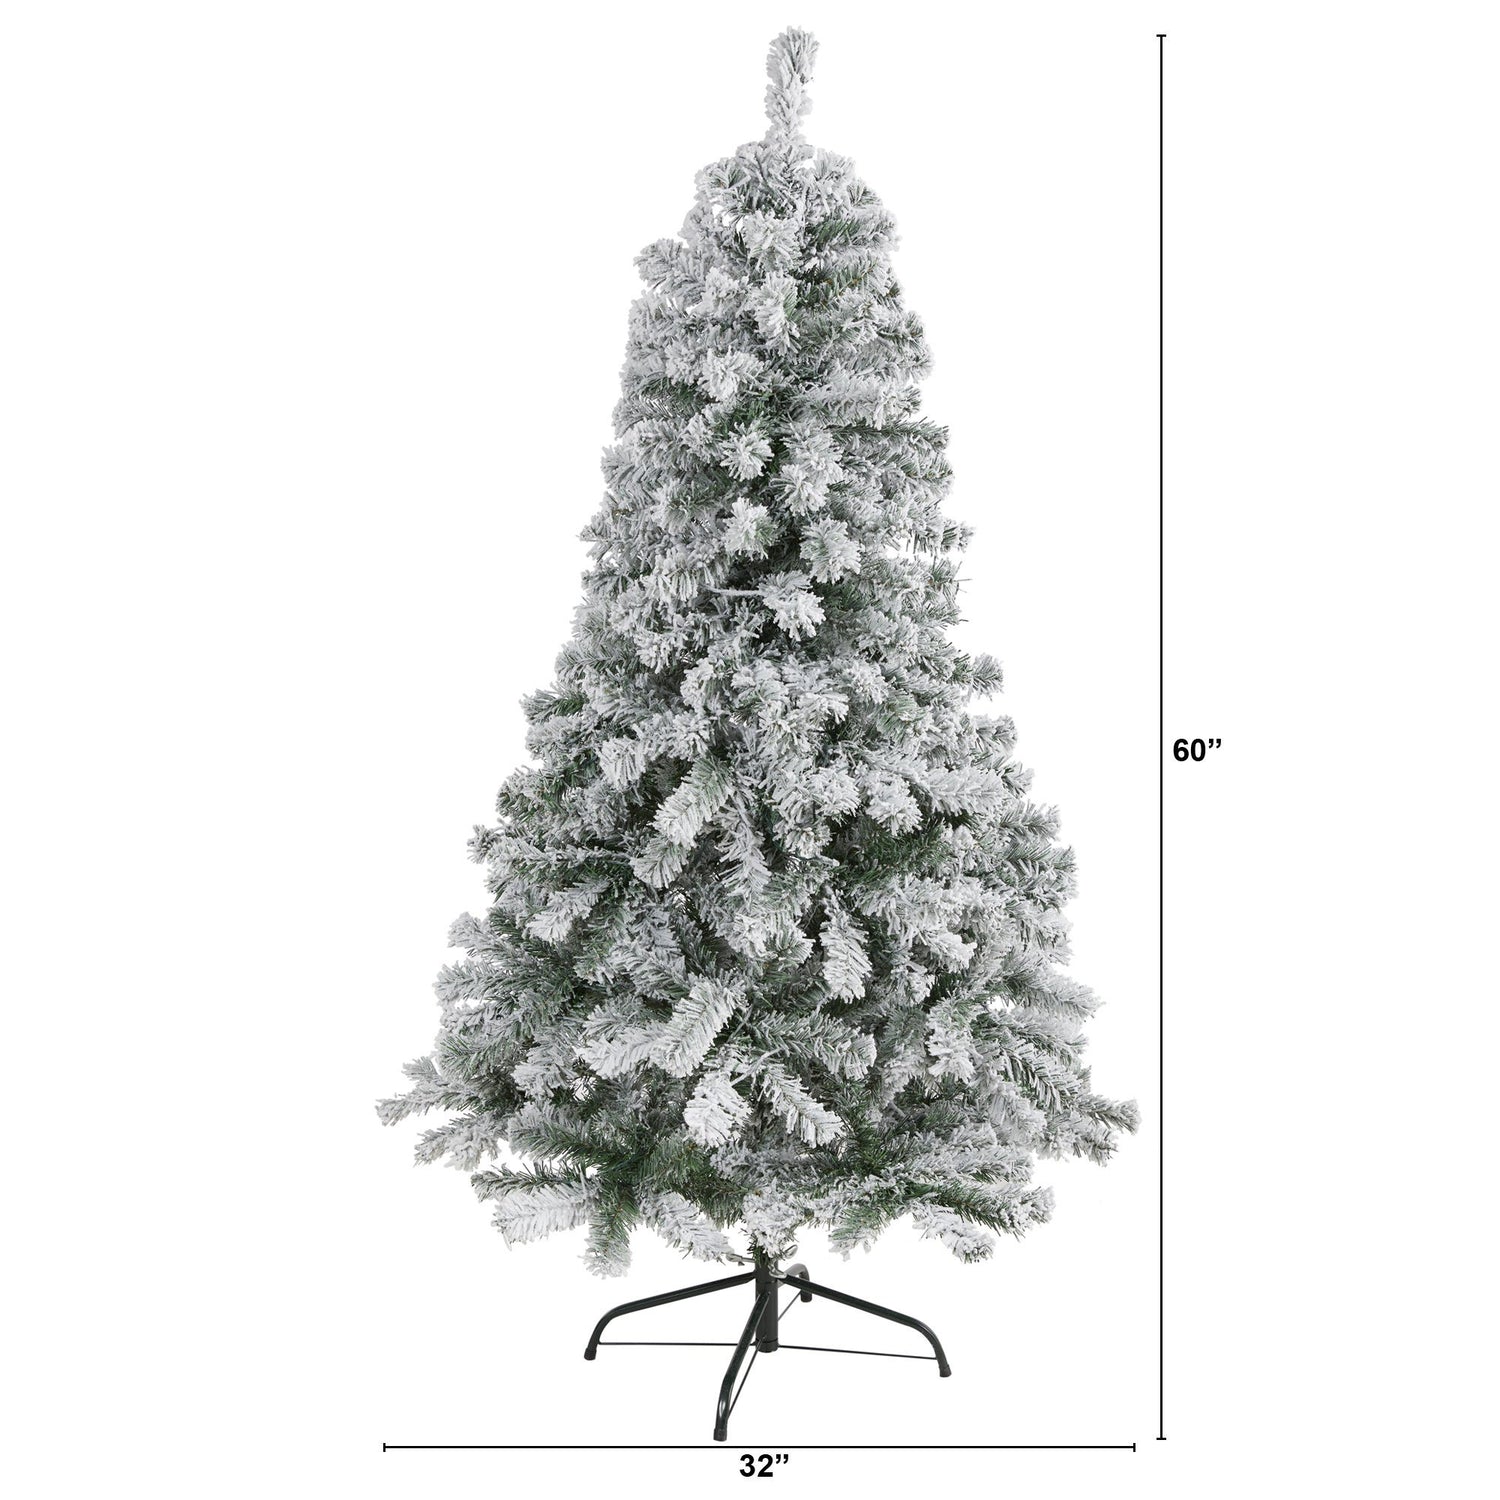 5' Flocked Rock Springs Spruce Artificial Christmas Tree